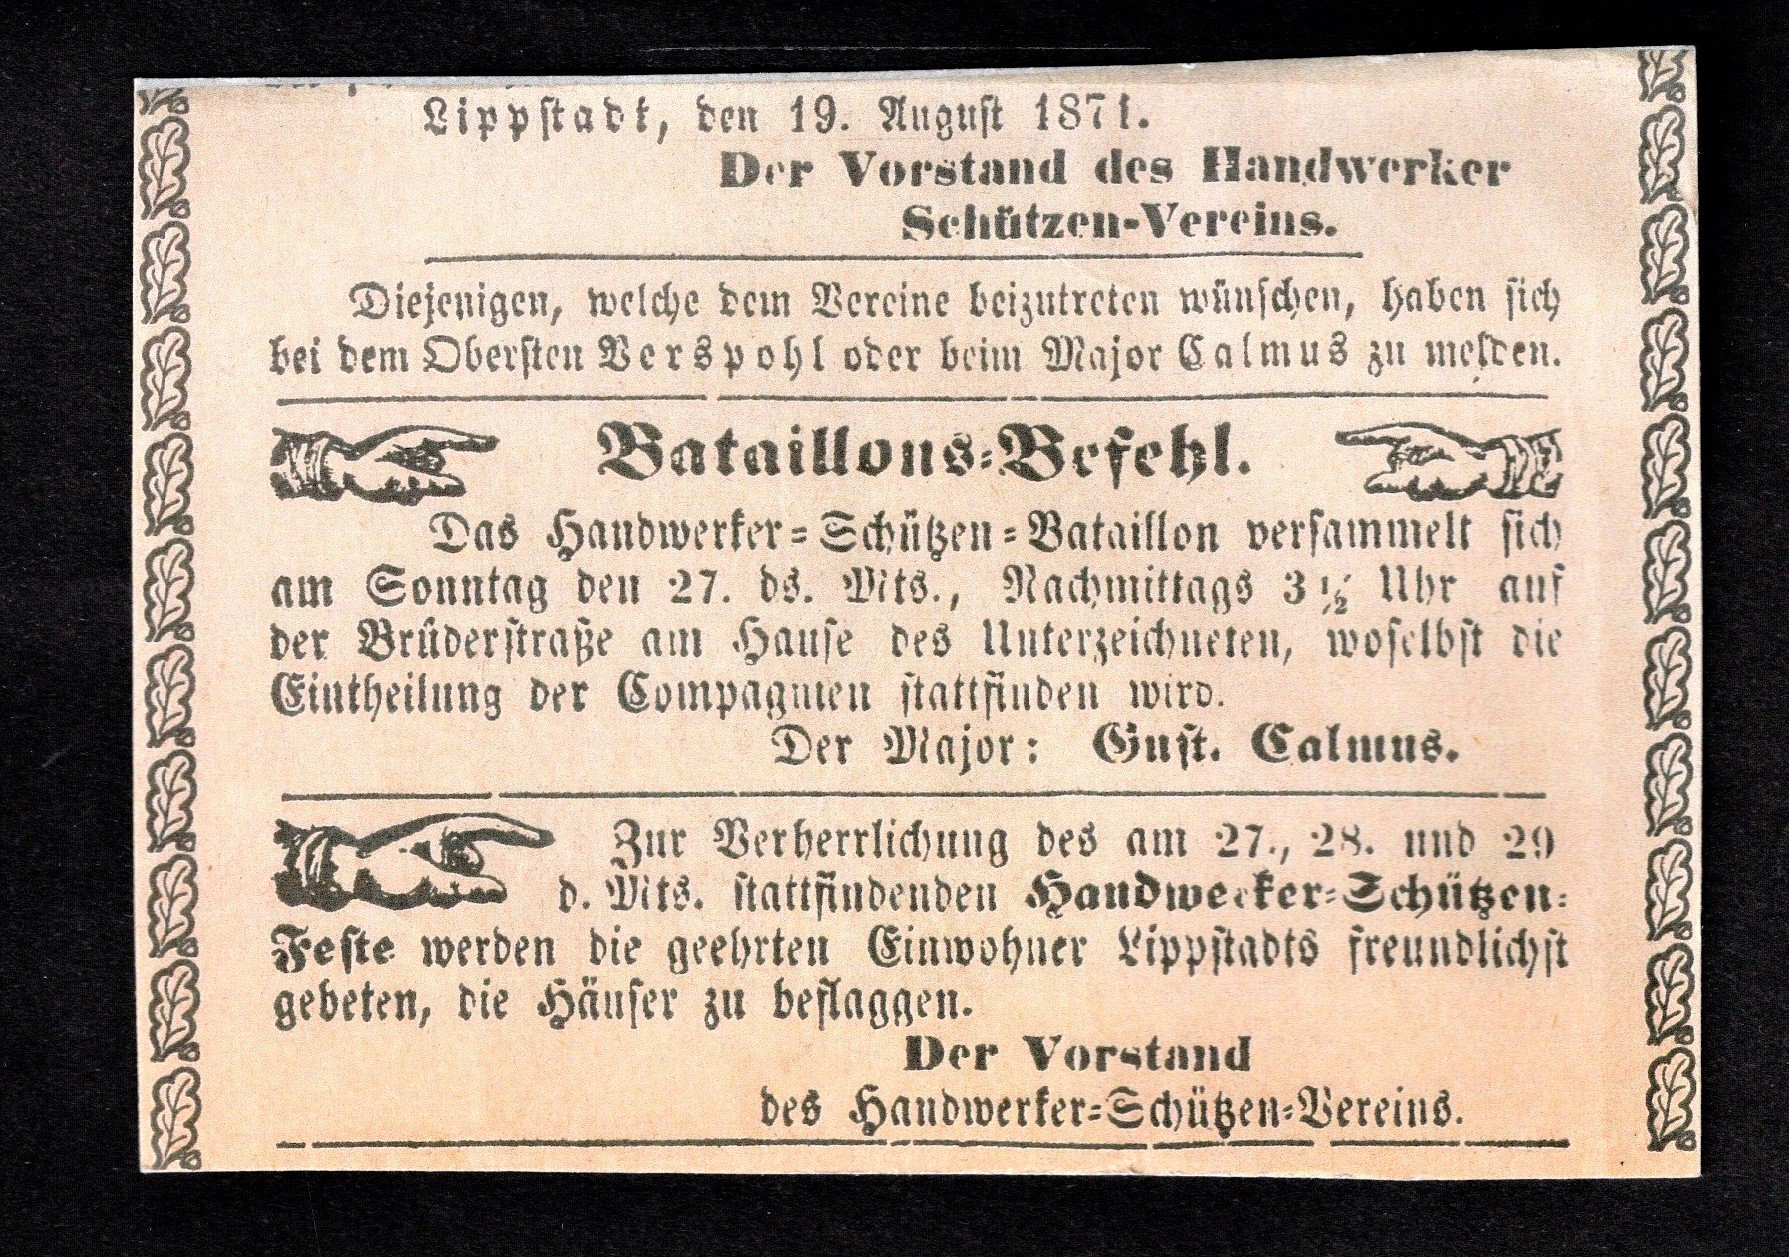 Aushangbaltt Batallionsbefehl Handwerker Schützenverein Lippstadt 1871 (Stadtmuseum Lippstadt CC BY-NC-ND)